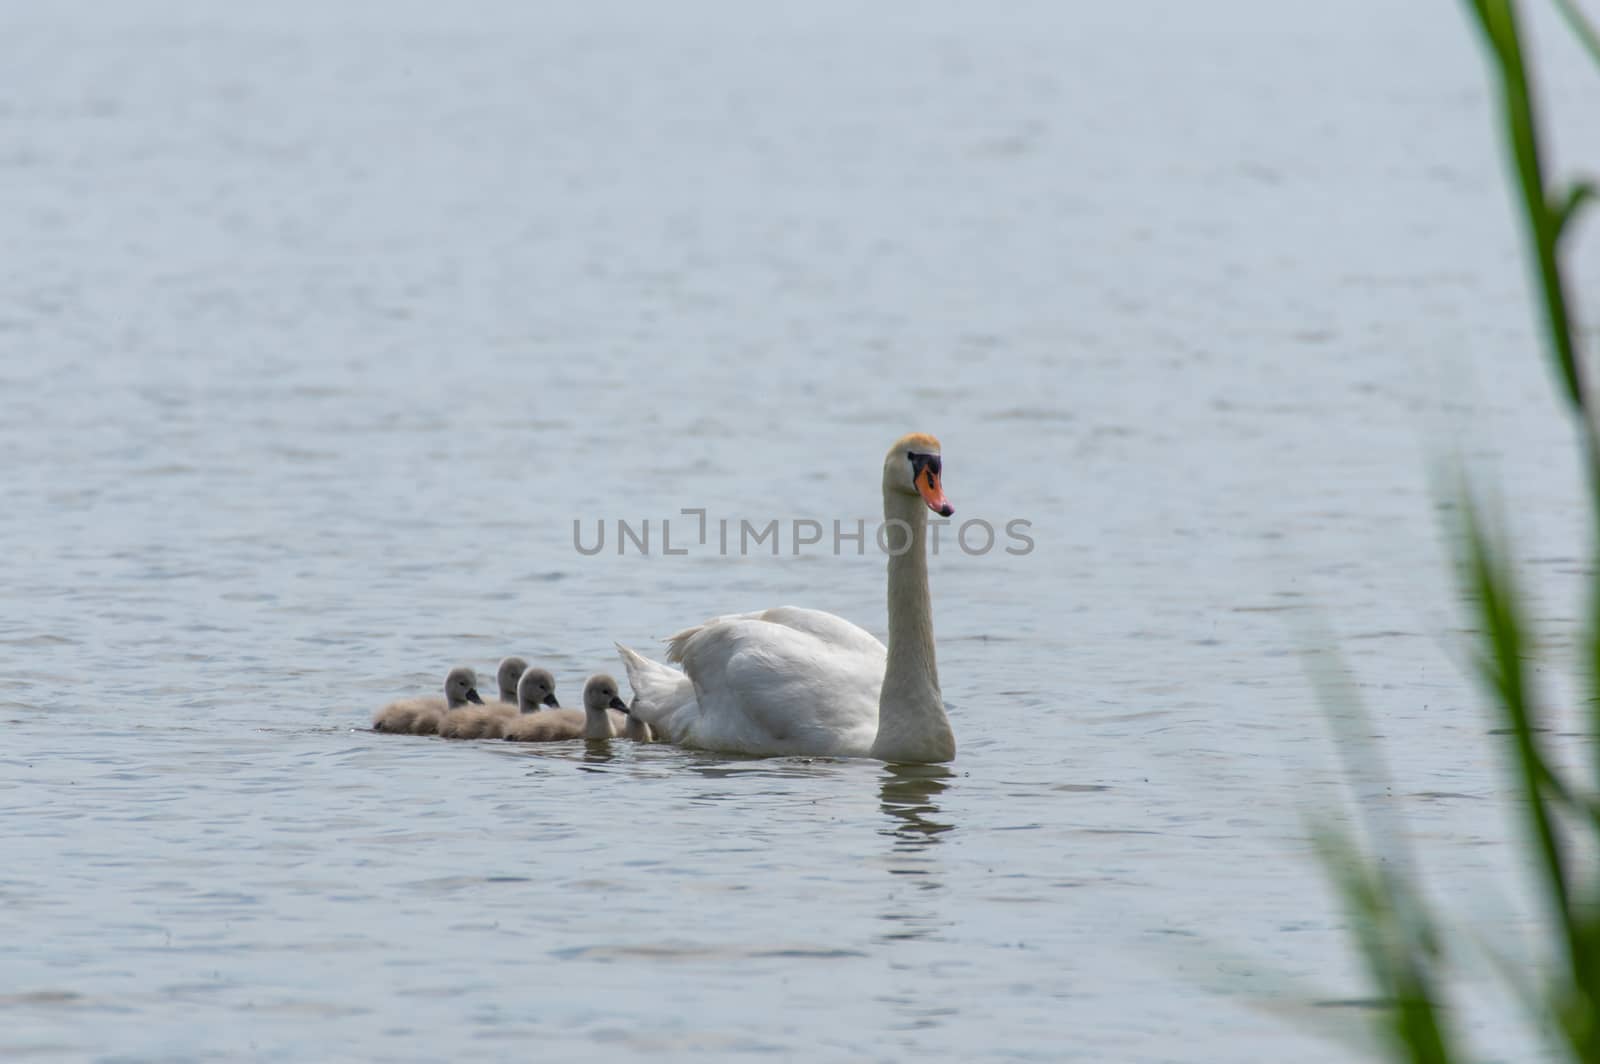 One swan (cygnus) with her swan chicks swimming on the lake Olbersdorfer See near Zittau, Saxony / Germany